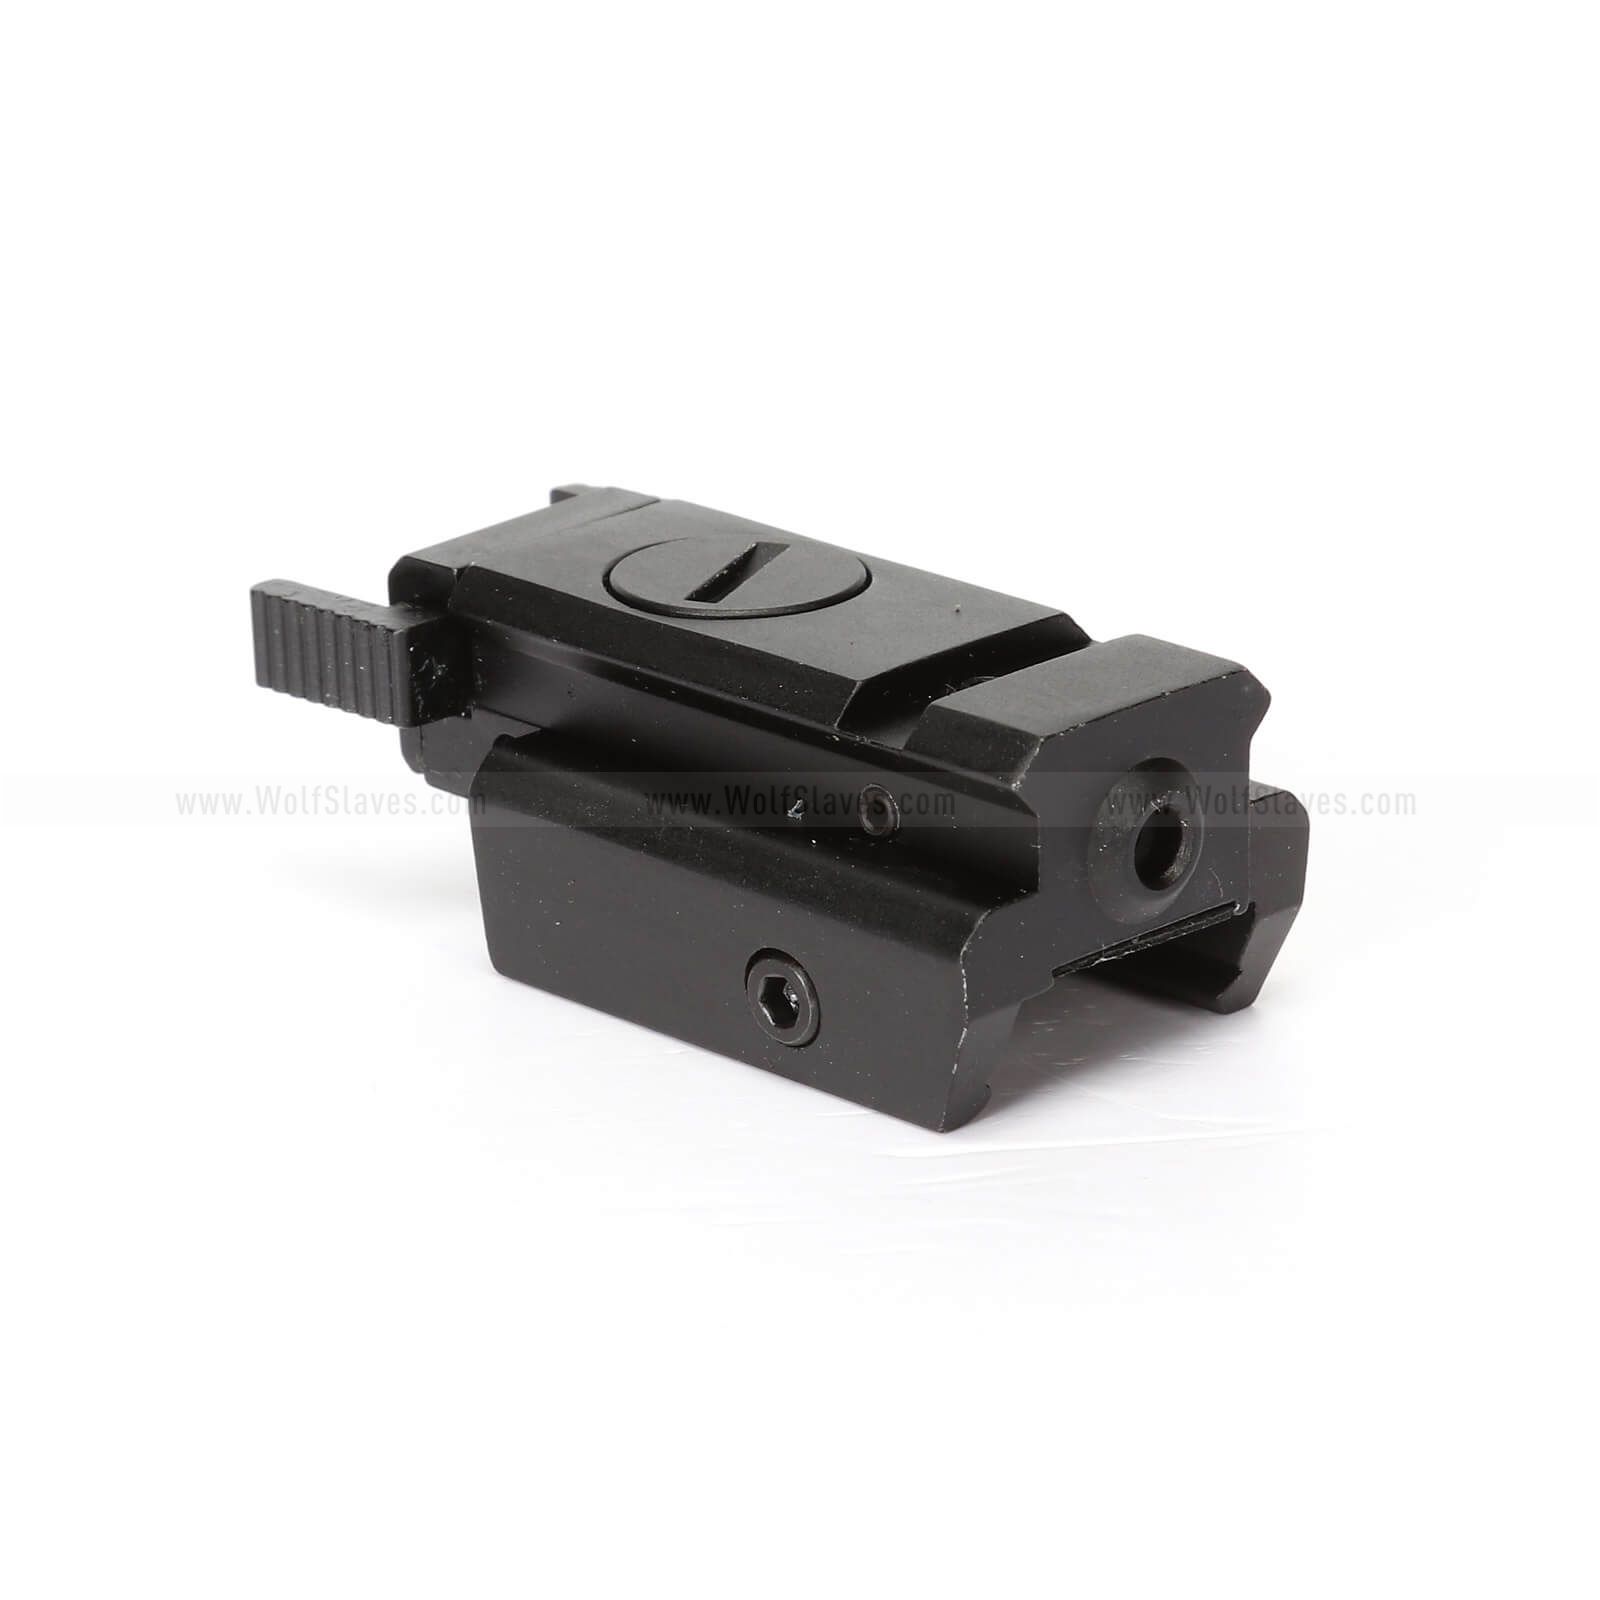 Red Dot Laser Sight Low Profile For Rifle Pistol Gun Picatinny Rail 20mm Mount 